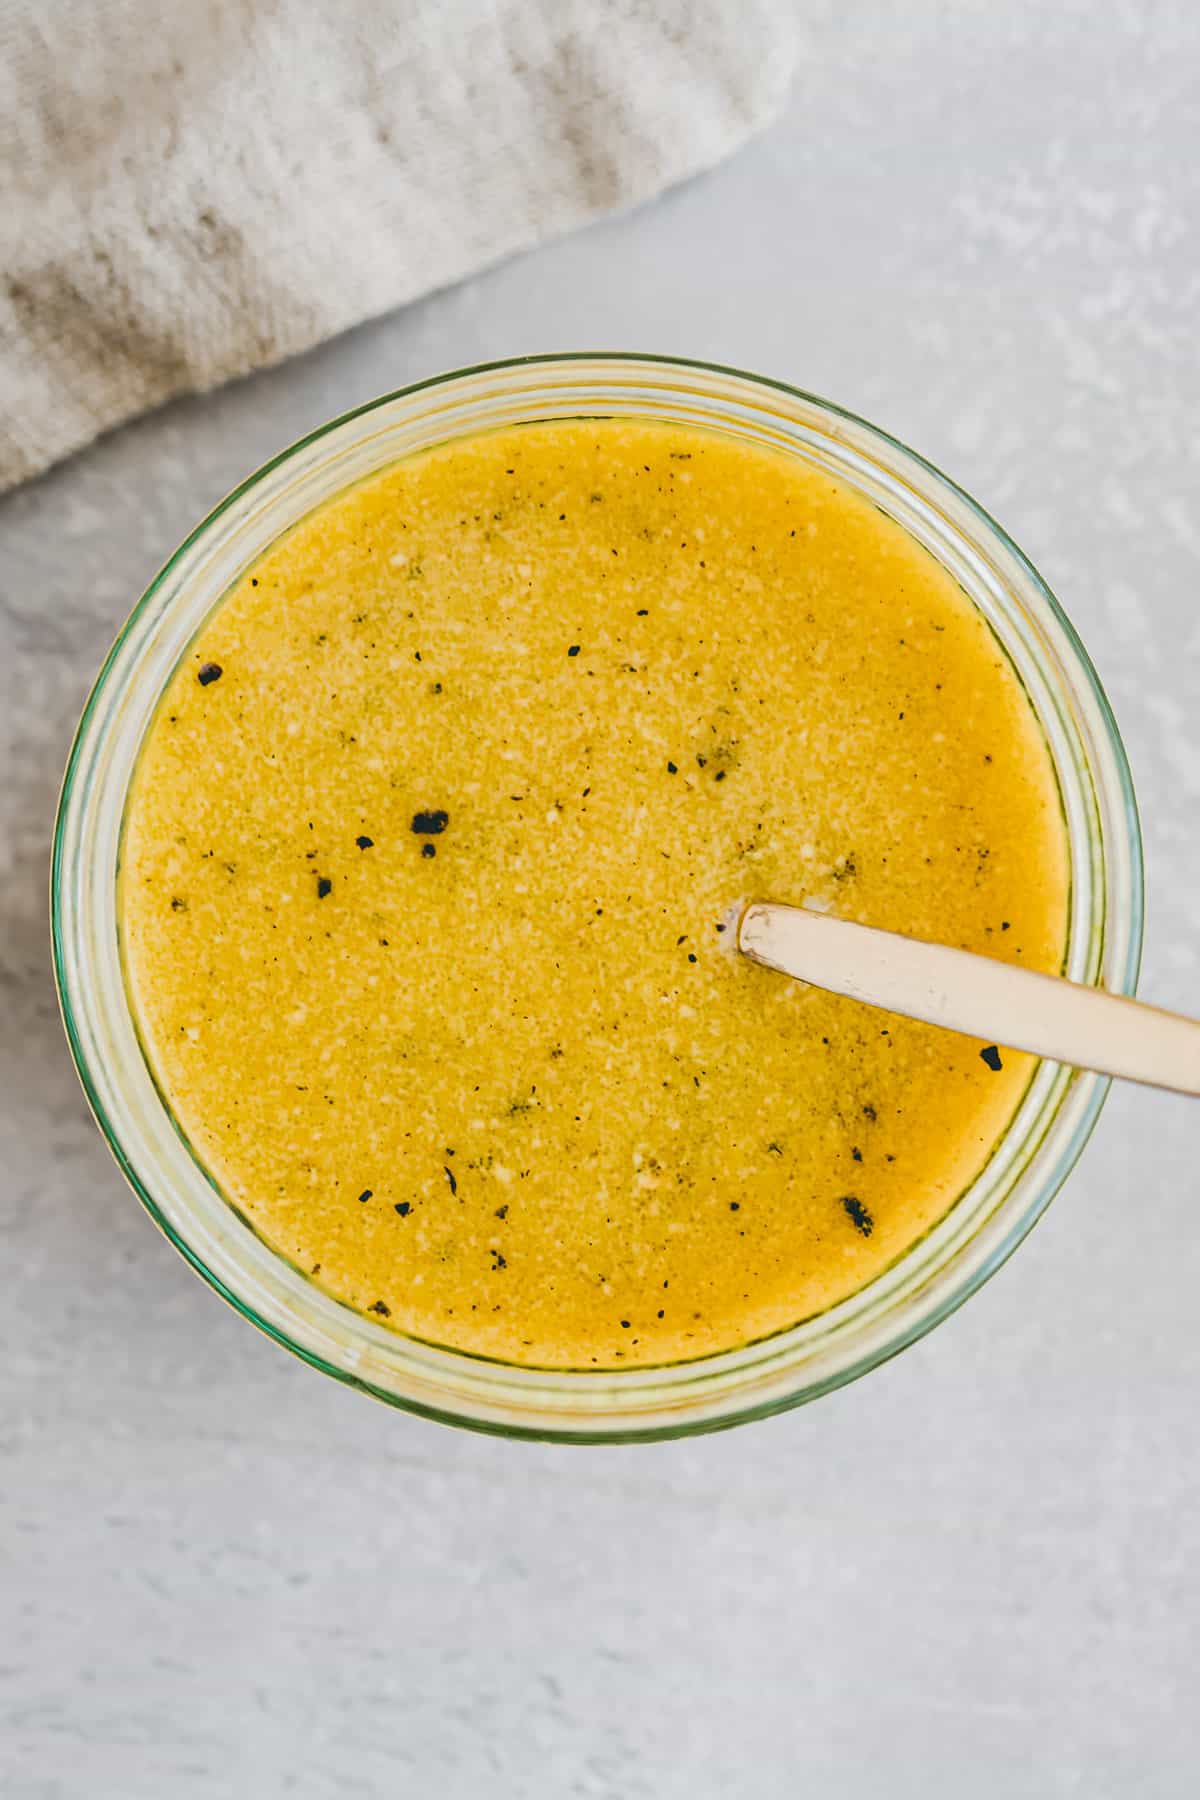 vegan honey mustard dressing in a glass bowl